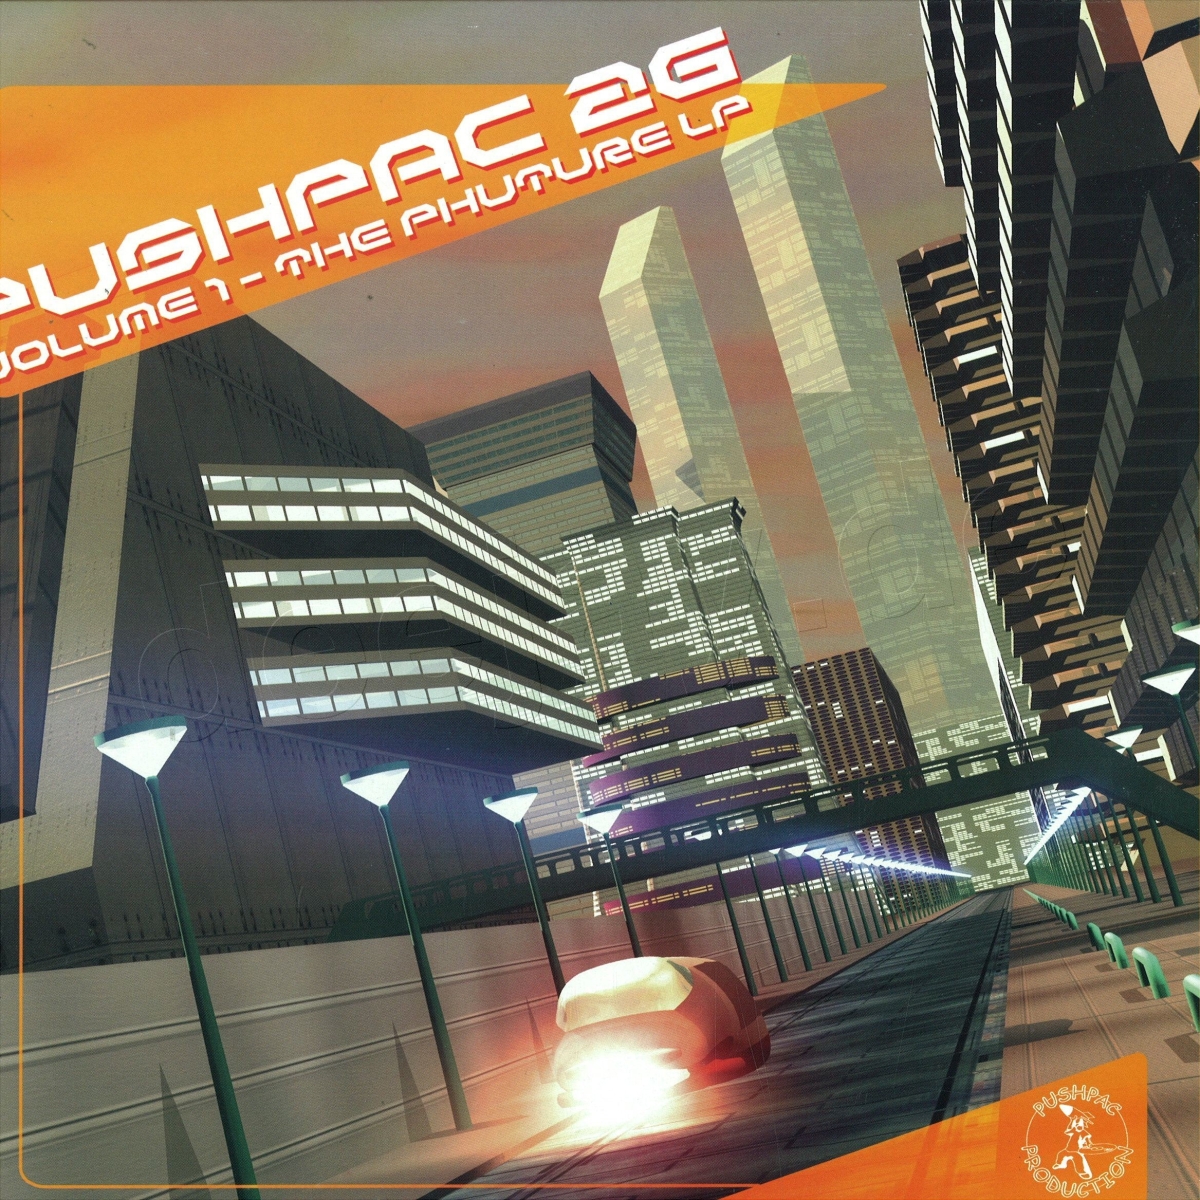 Buy vinyl artist% Pushpac 2G Volume One - The Phuture LP for sale